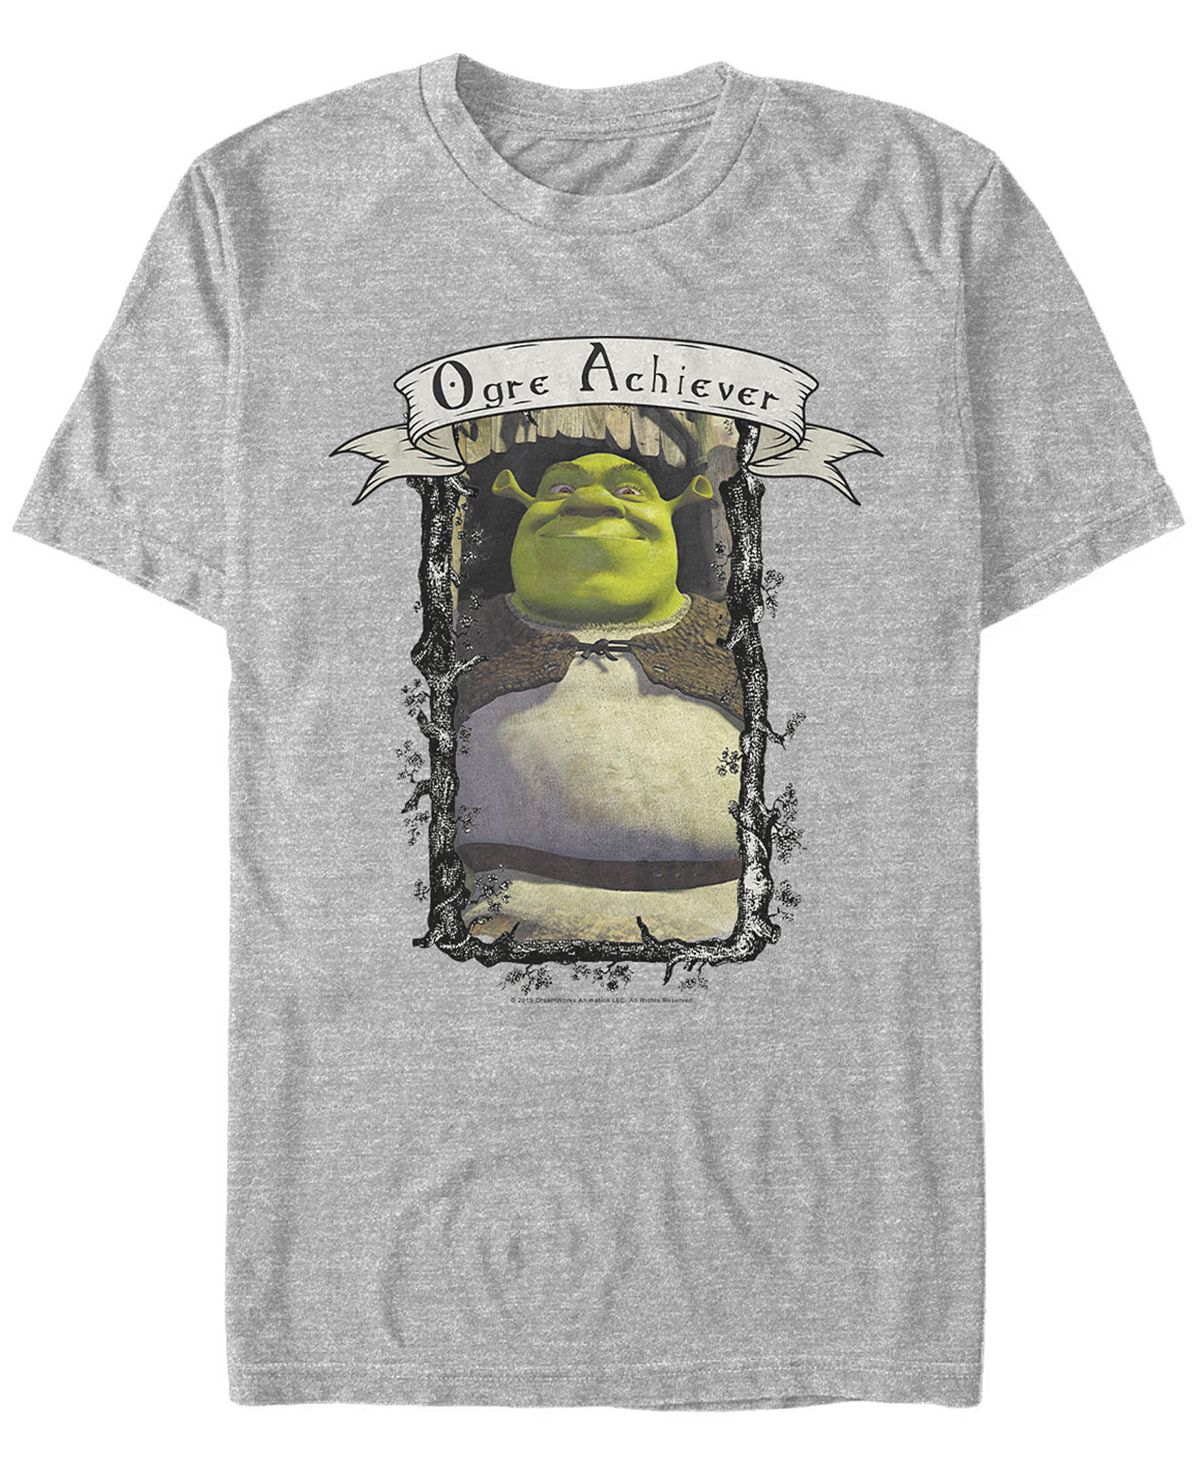 Мужская футболка с коротким рукавом shrek ogre achiever Fifth Sun, мульти герти